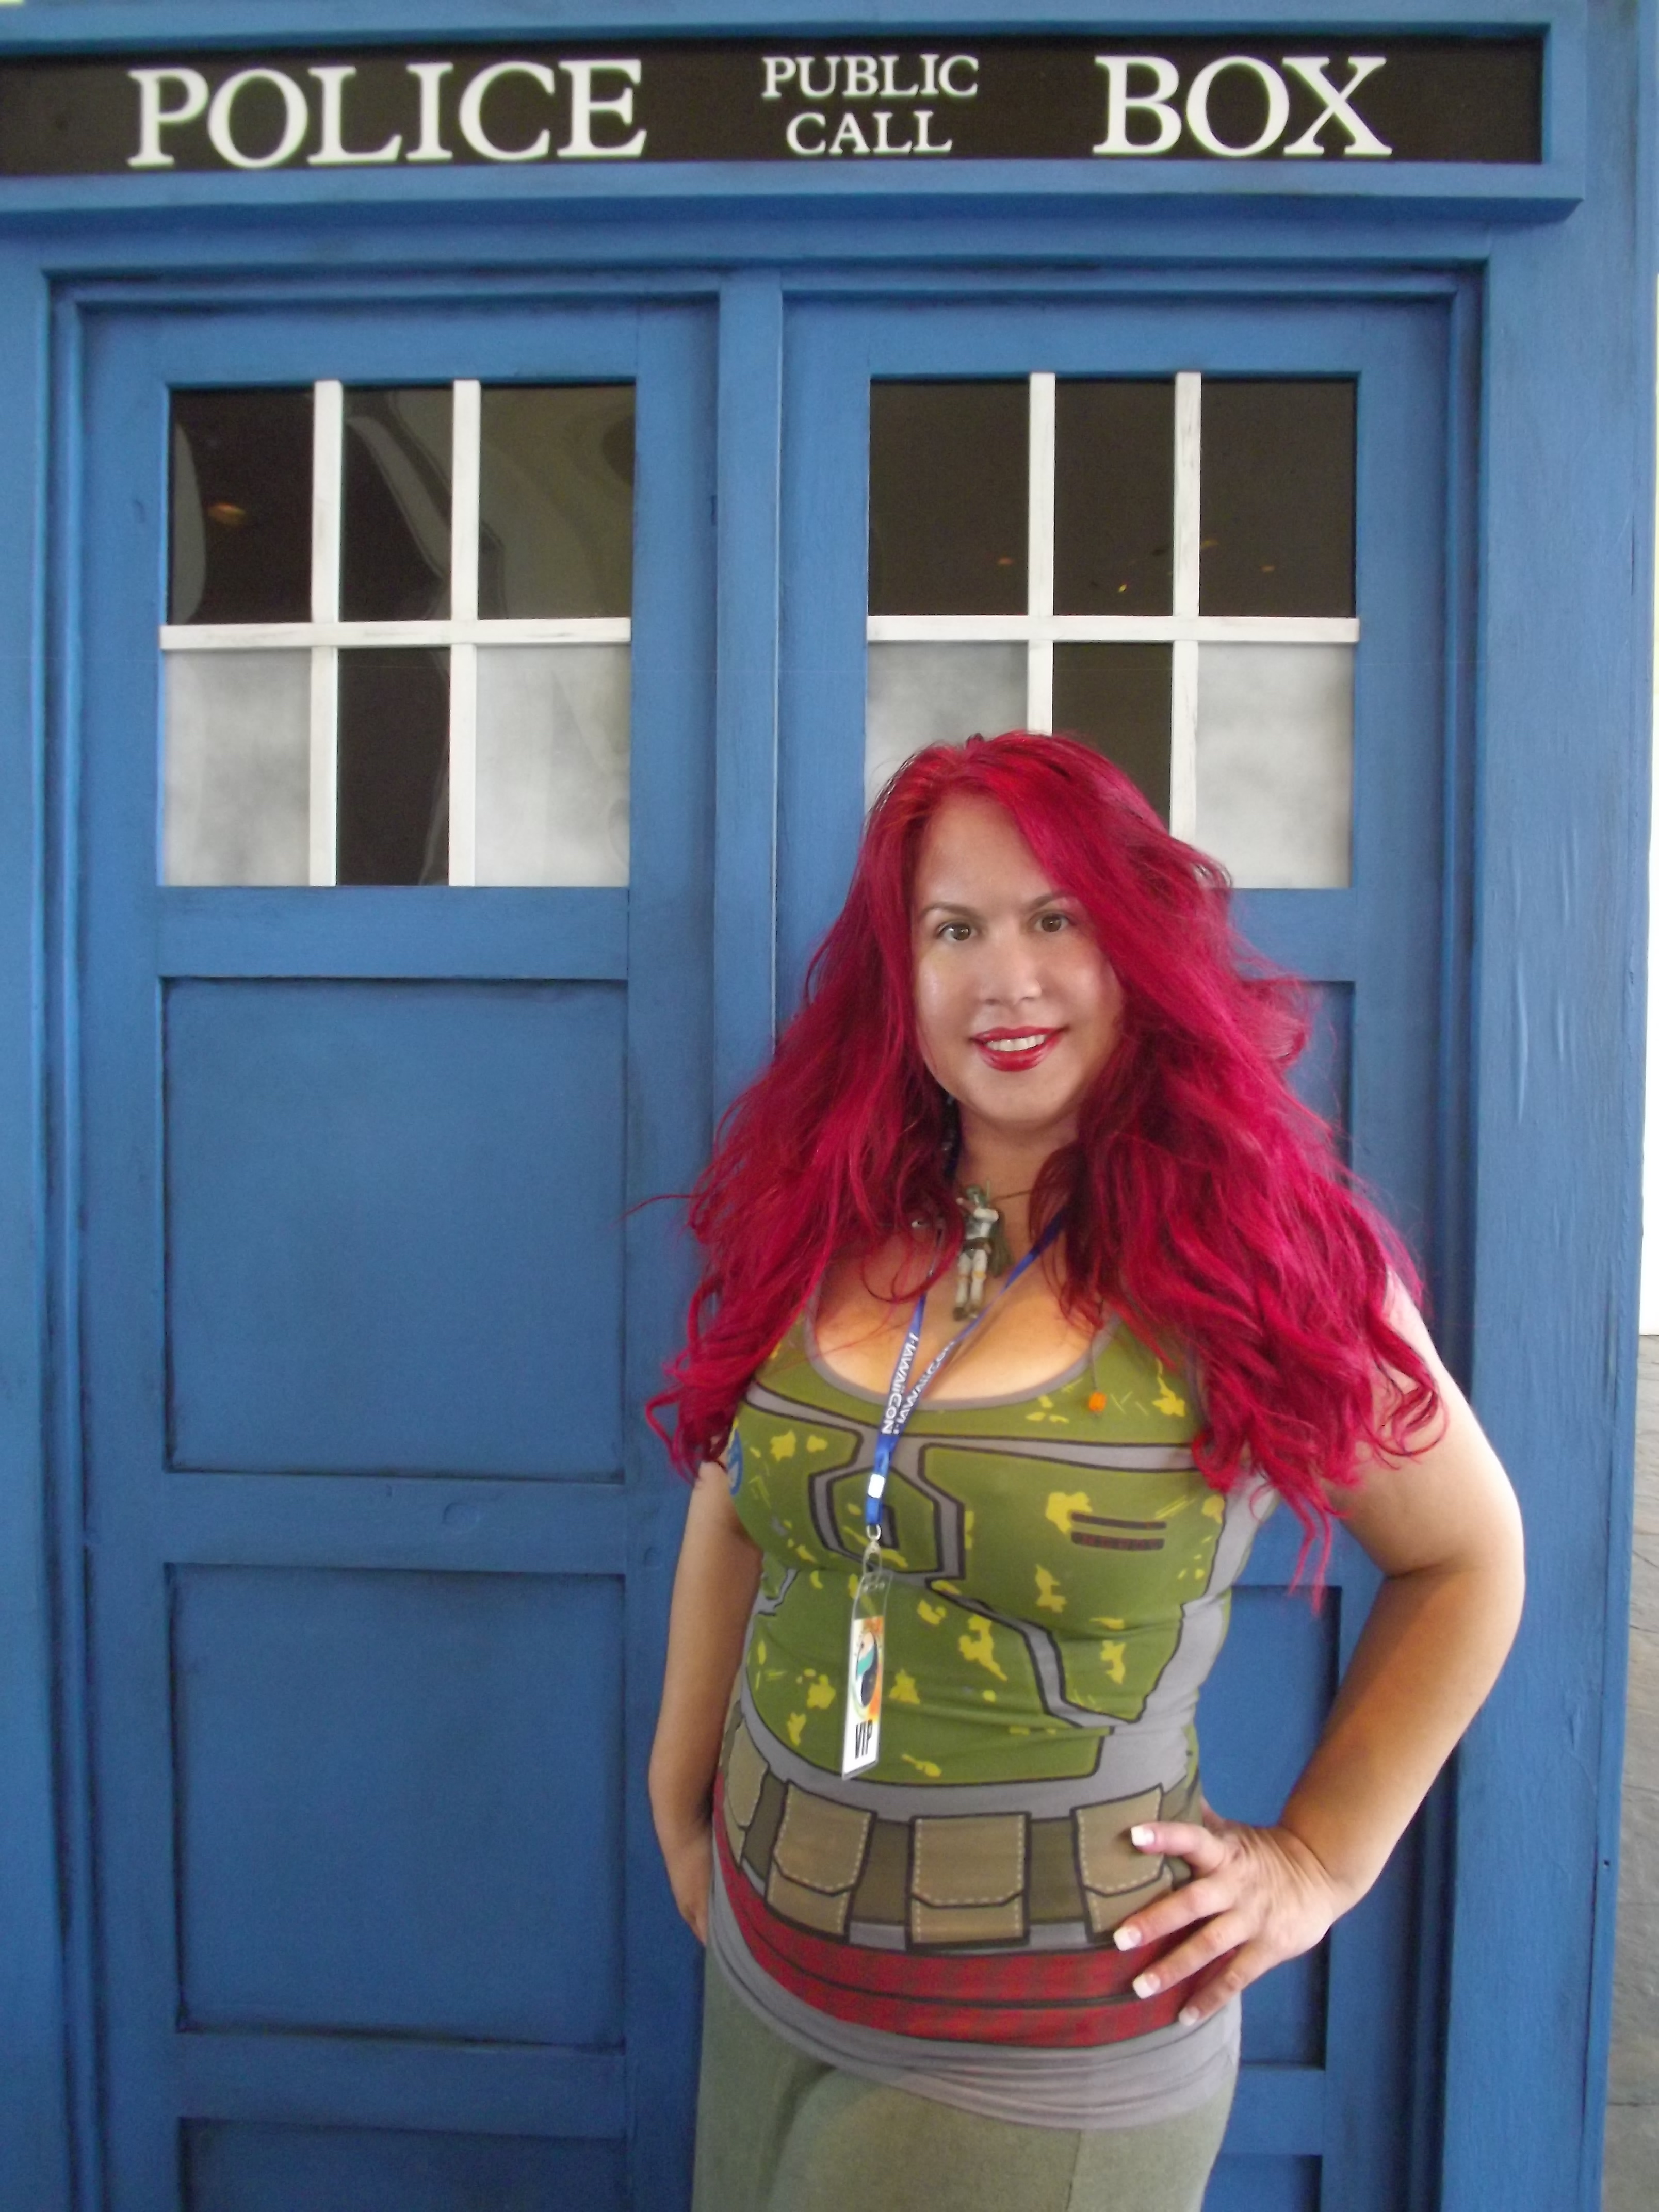 Actress/Designer Fileena Bahris speaks on panels at HawaiiCon ComicCon 2014